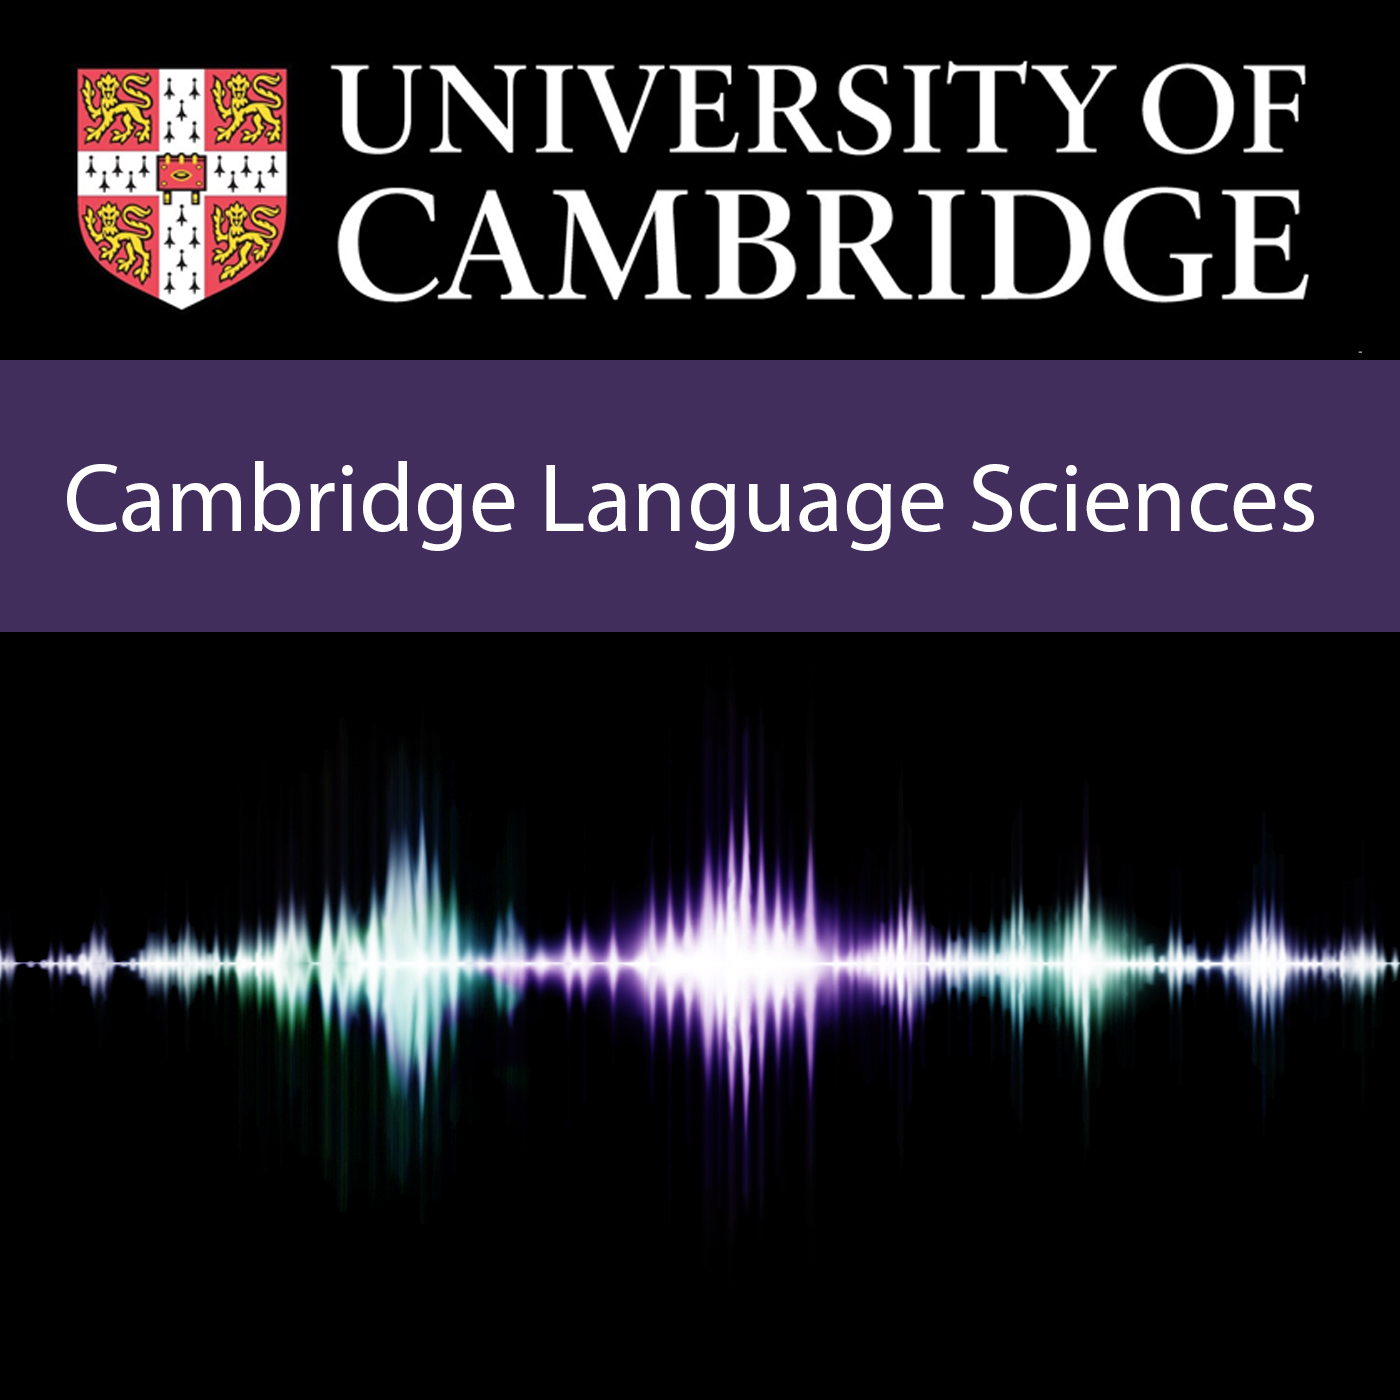 Language Sciences Annual Symposium 2019 - Perspectives on Language Change's image